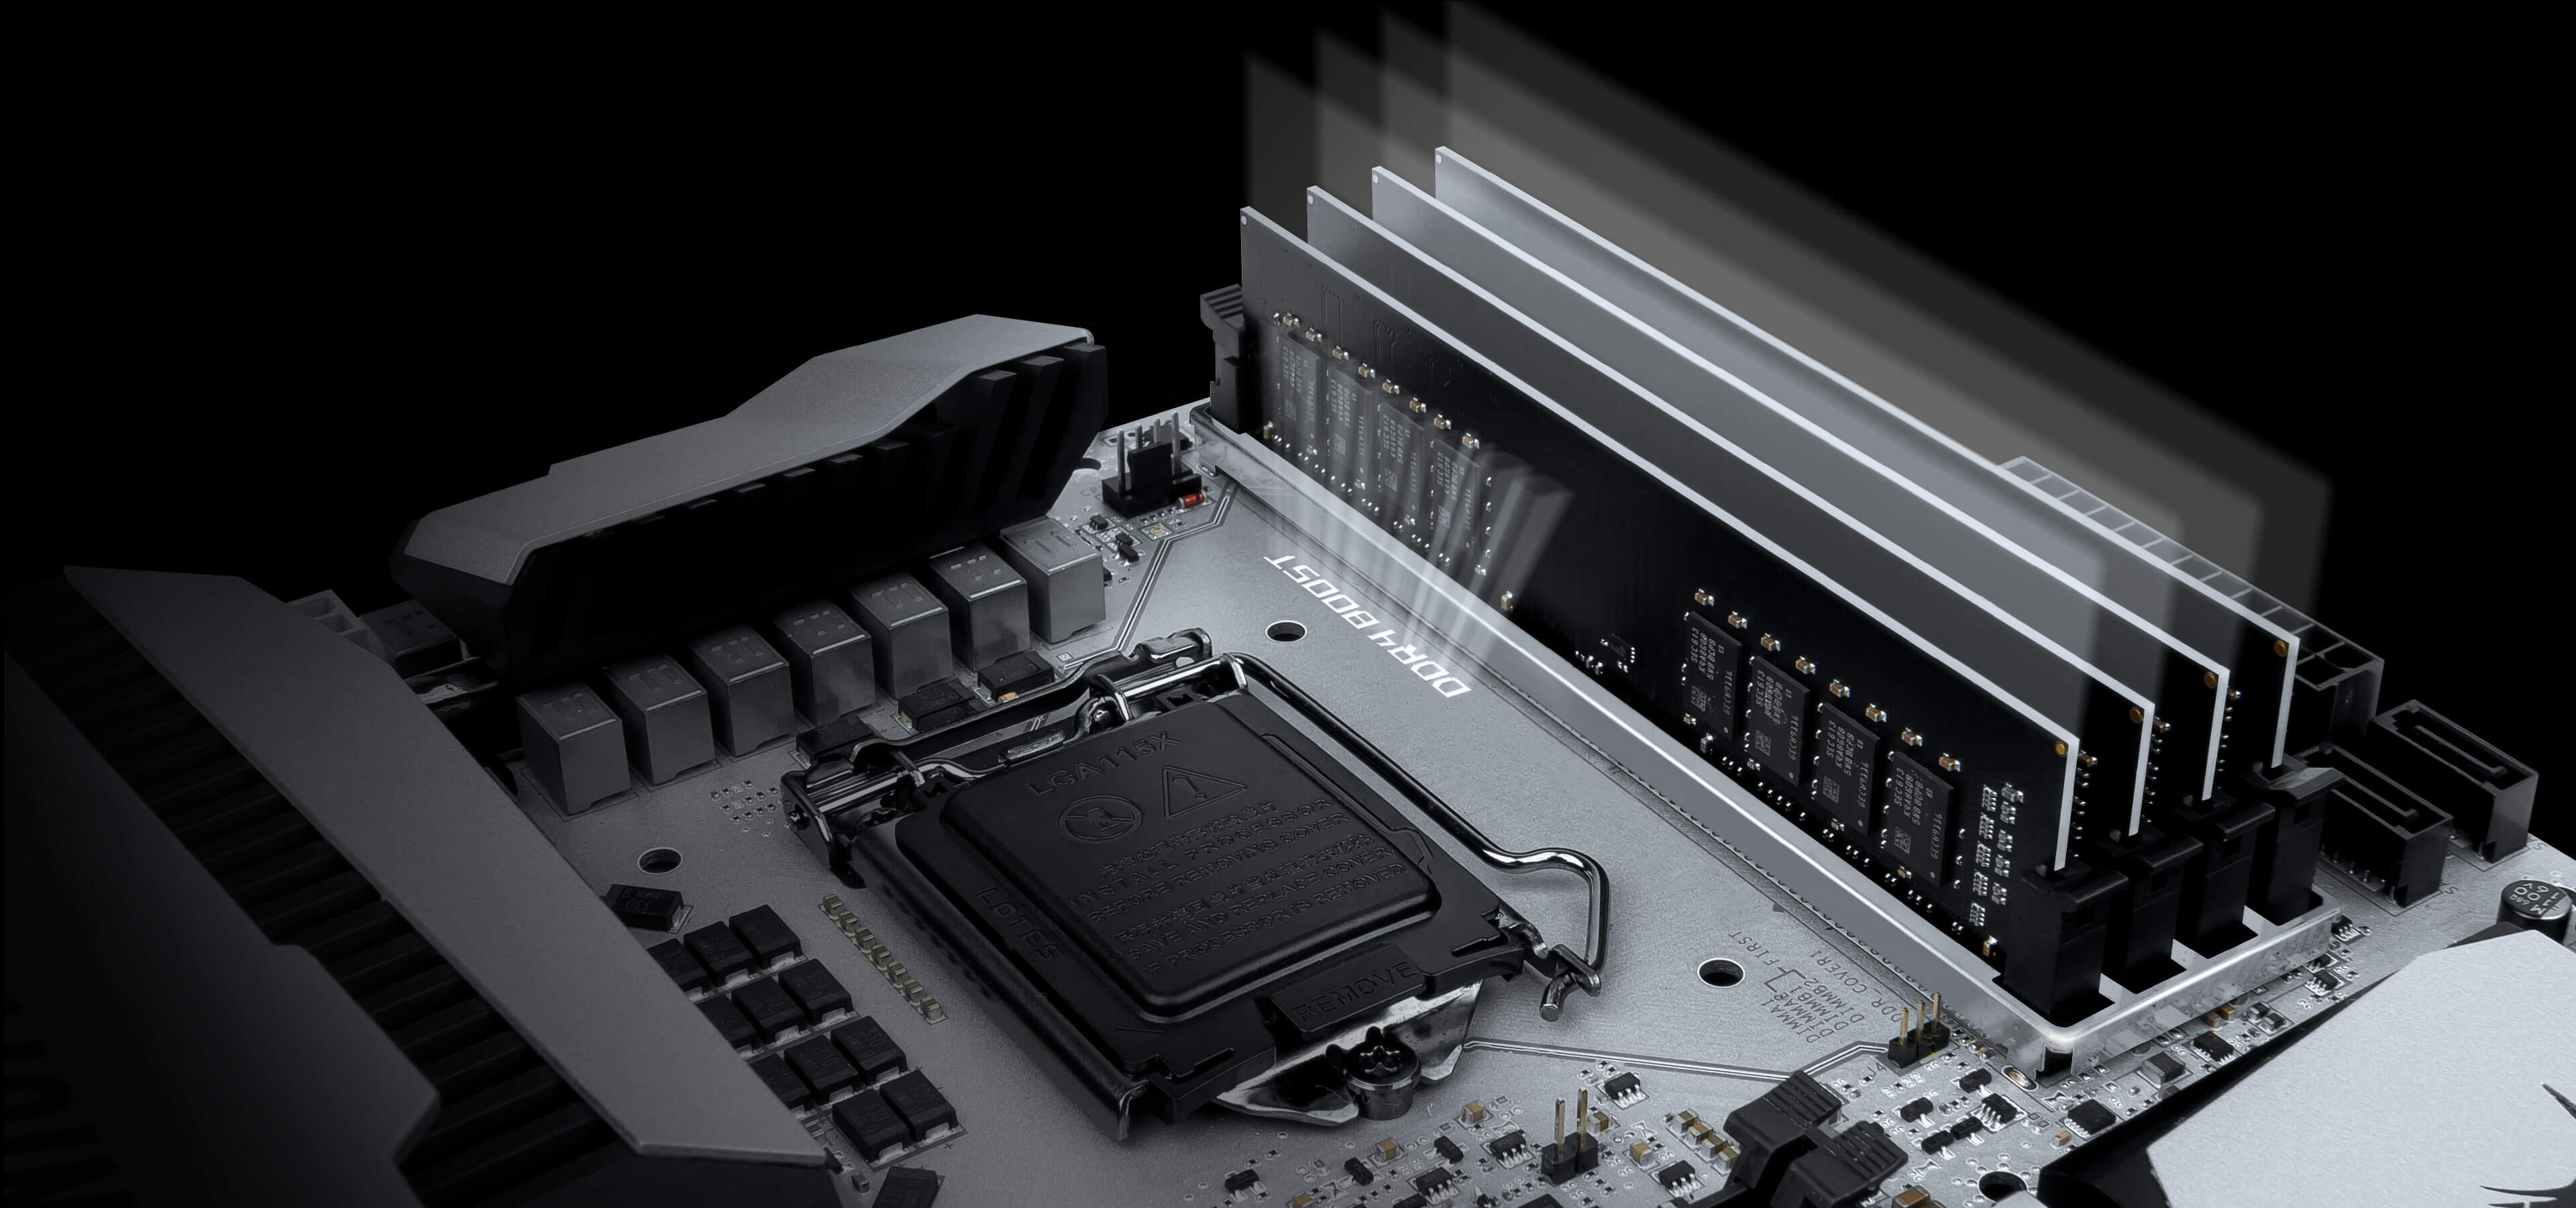 MSI Z270 Xpower Gaming Titanium LGA1151 ATX Motherboard